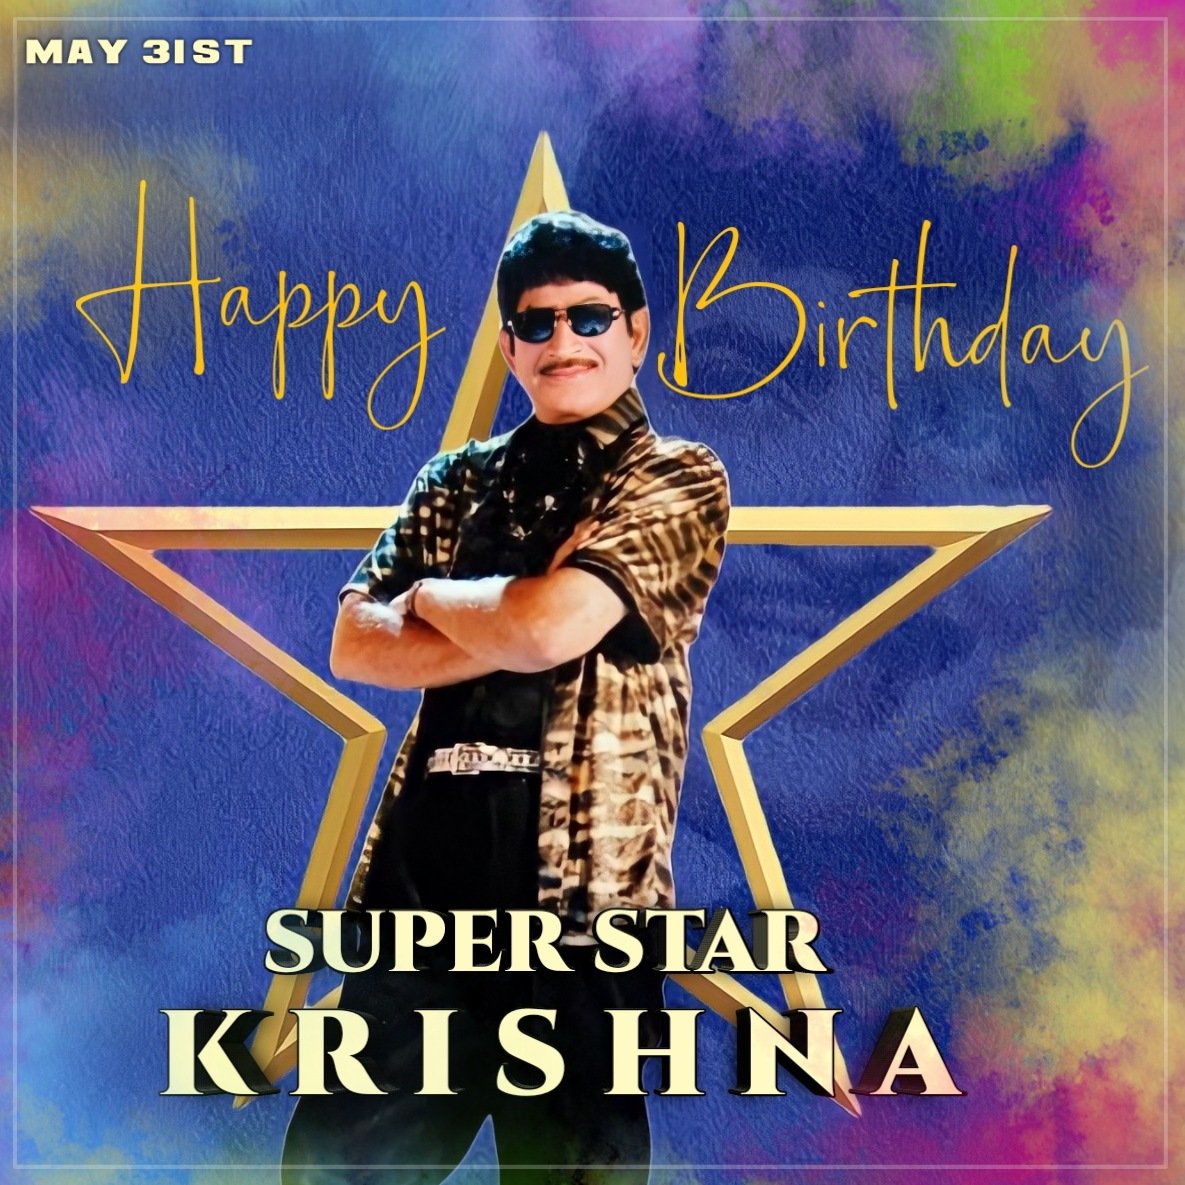 Daring and Dasing  legendary super star.Trend setter in TFI. Little is said about Krishna Garu. Wishing you best of health and happiness 😊
#HBDLegendarySSKgaru